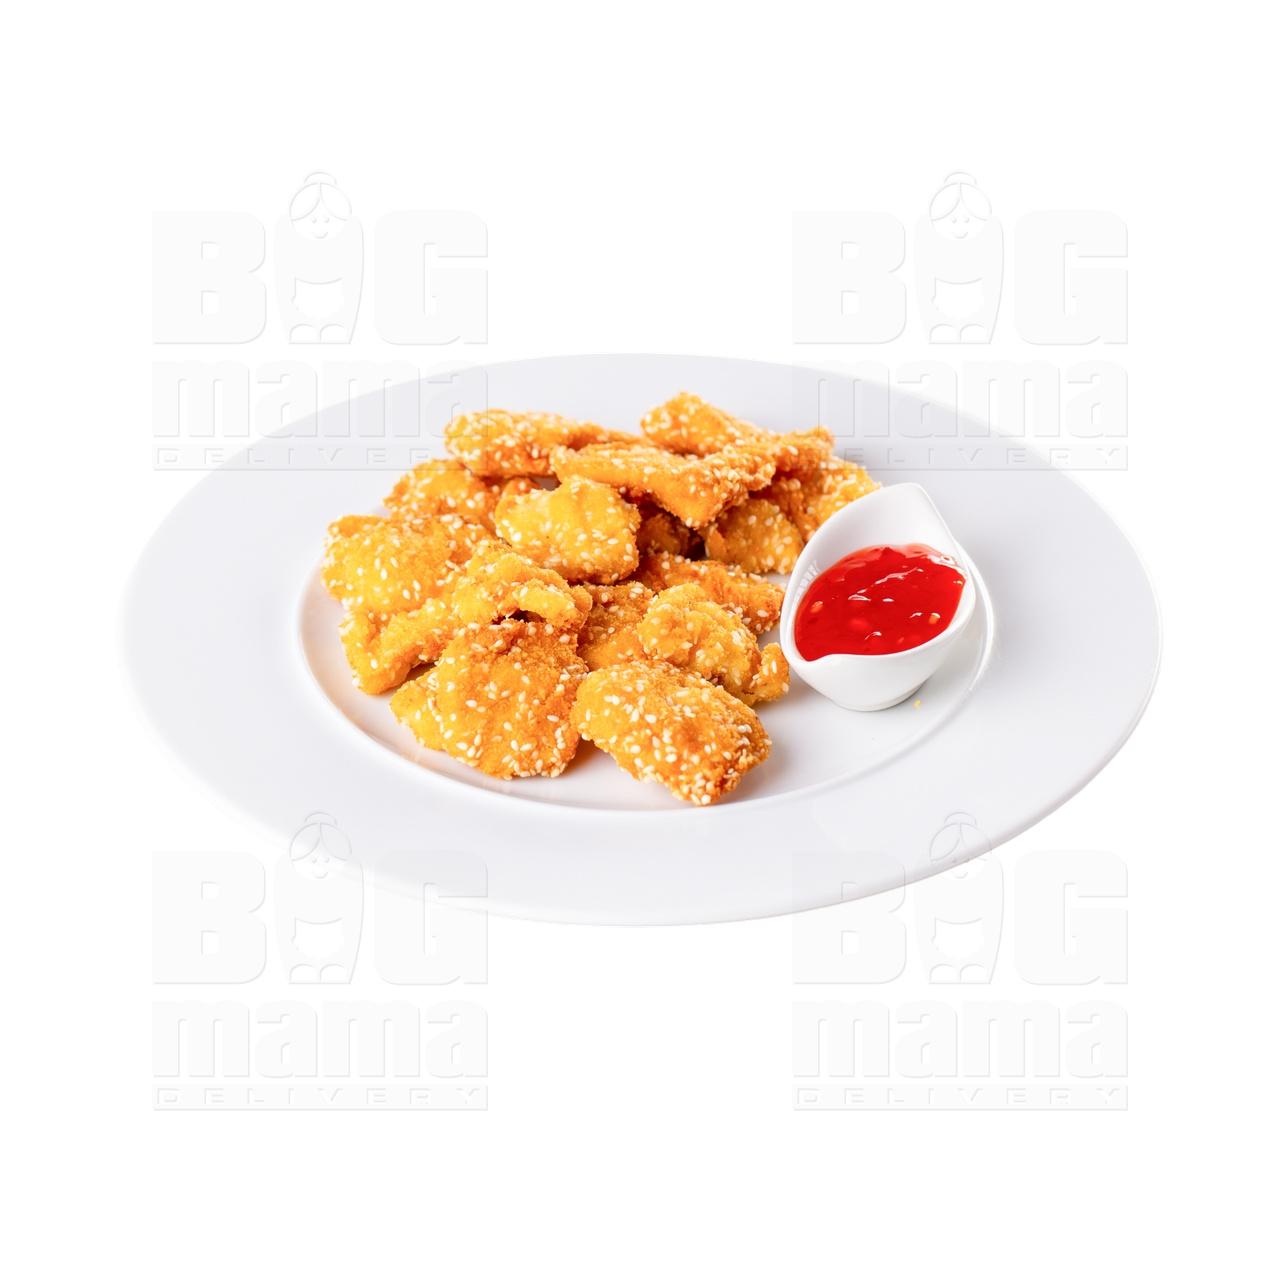 Product #266 image - Nuggets din piept de pui cu sos chili dulce